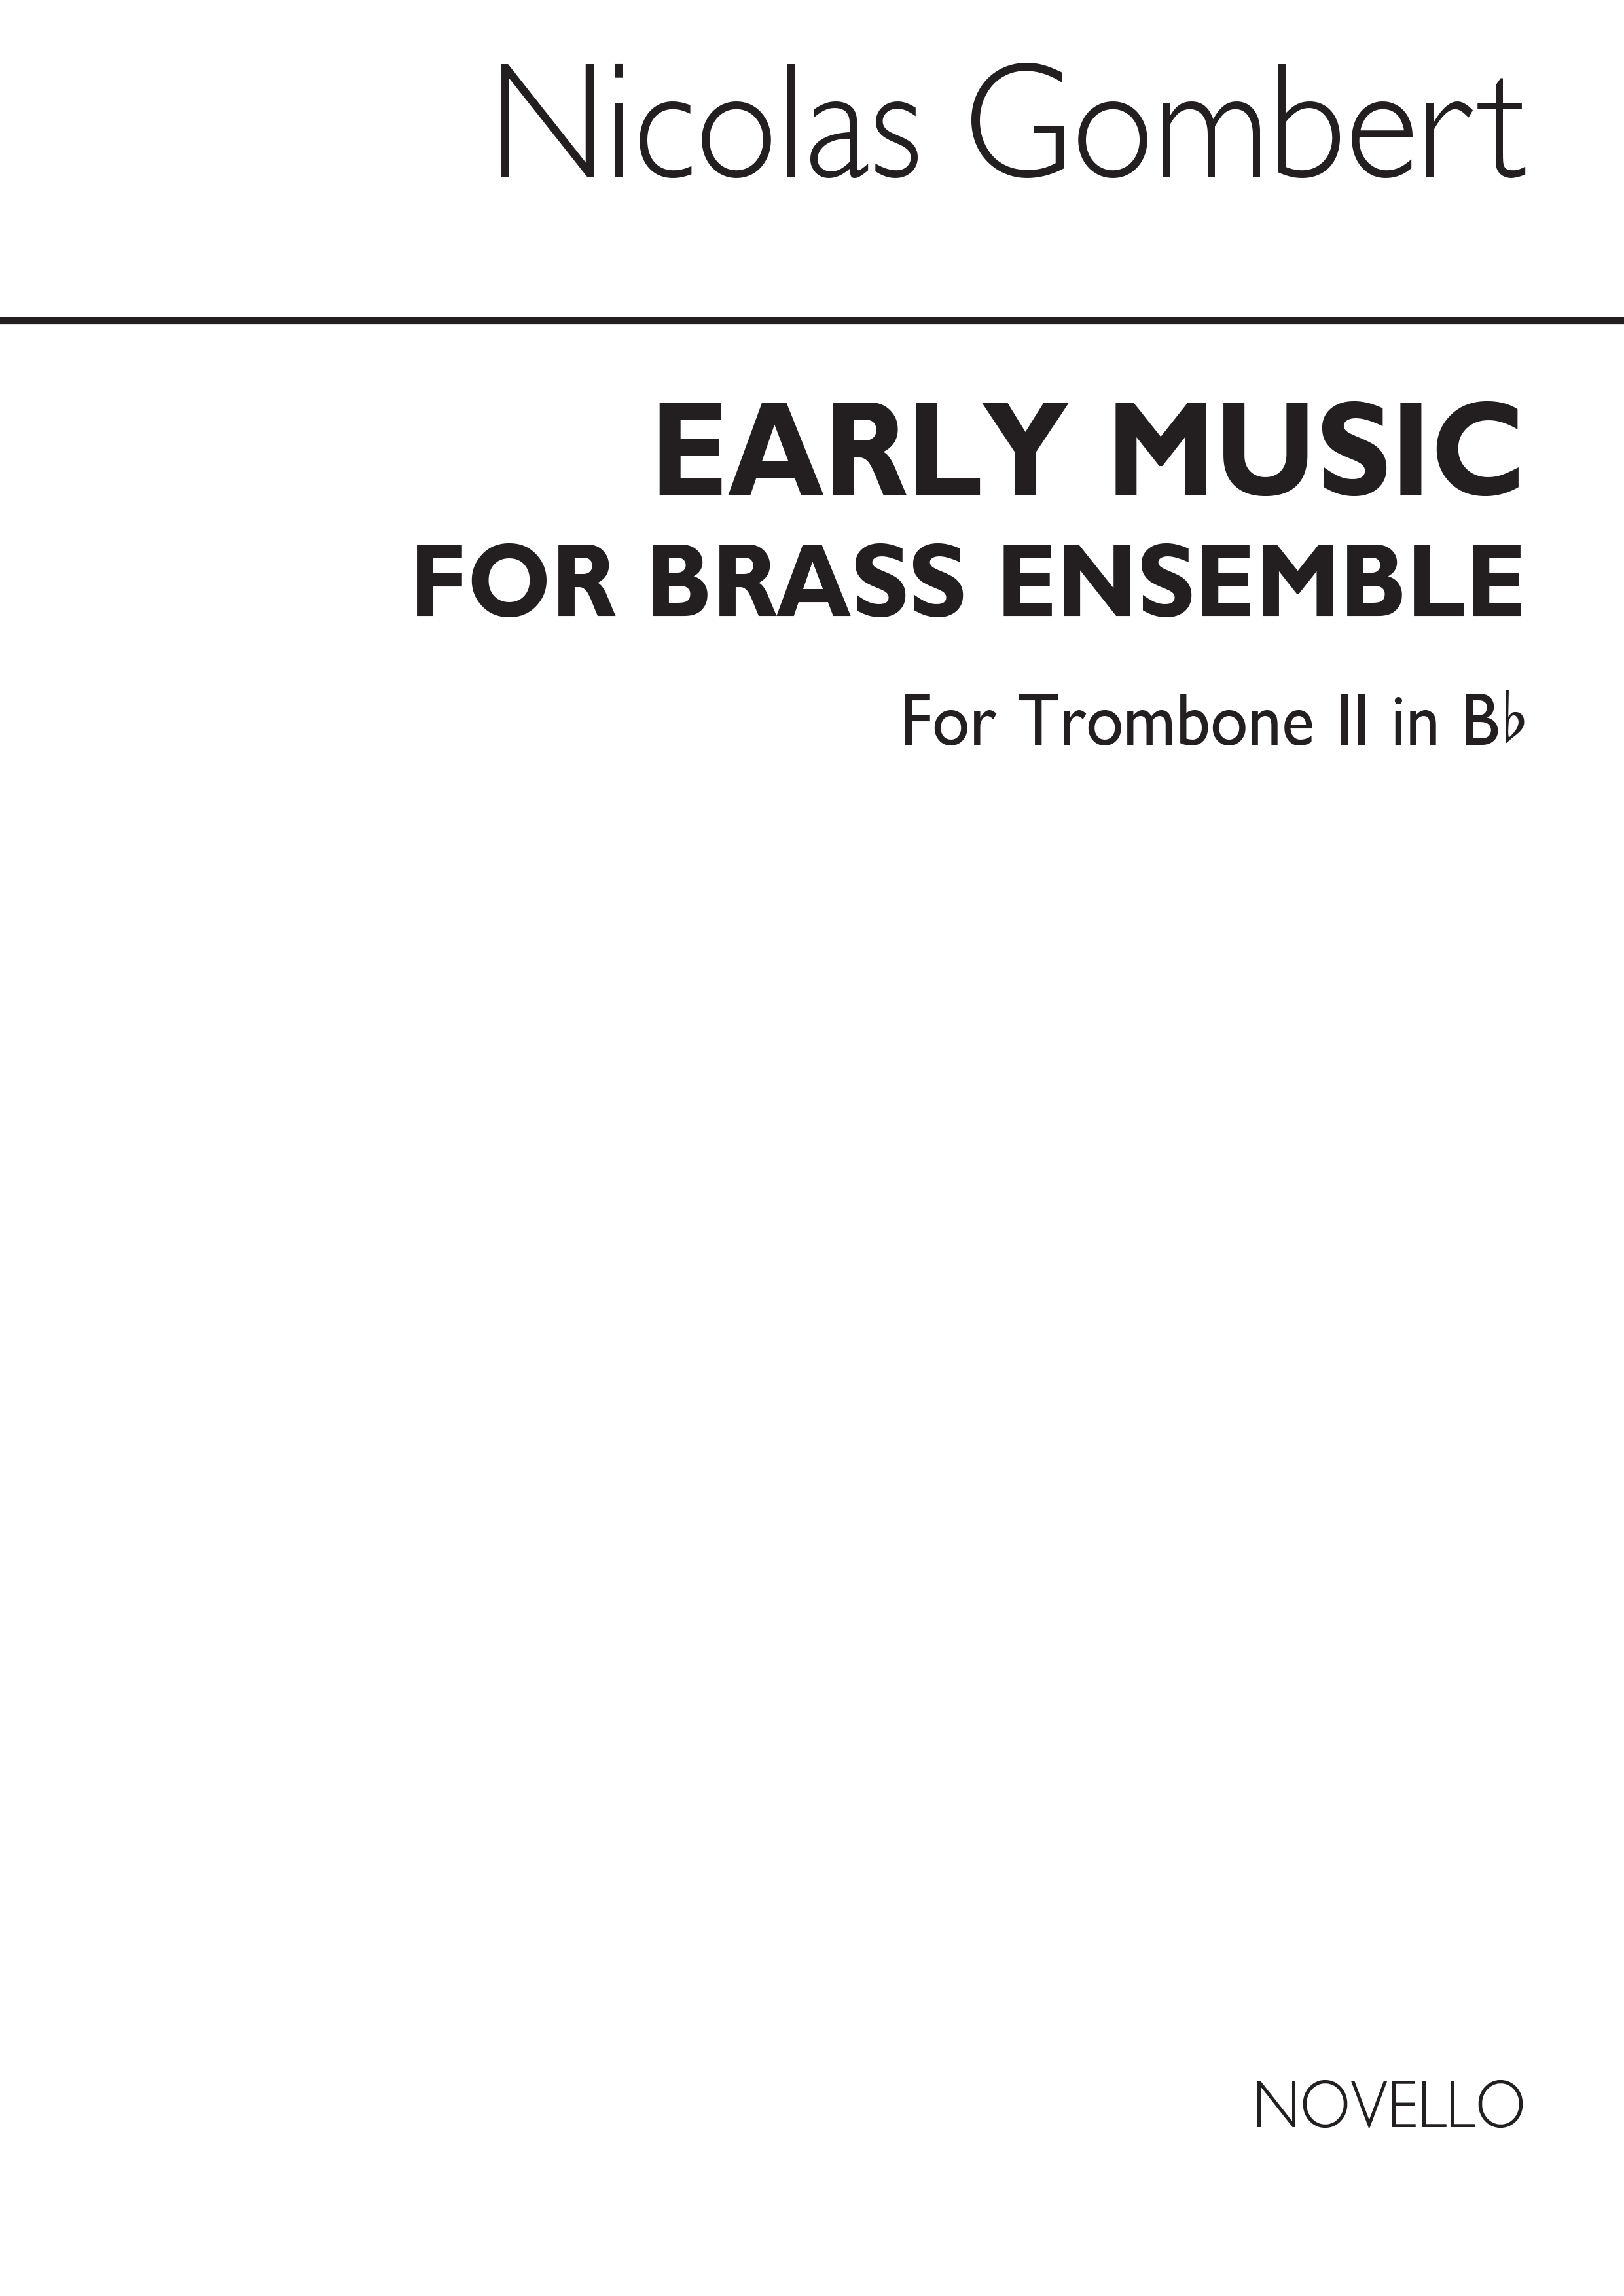 Lawson: Early Music For Brass Ensemble Tbn 2 Tc